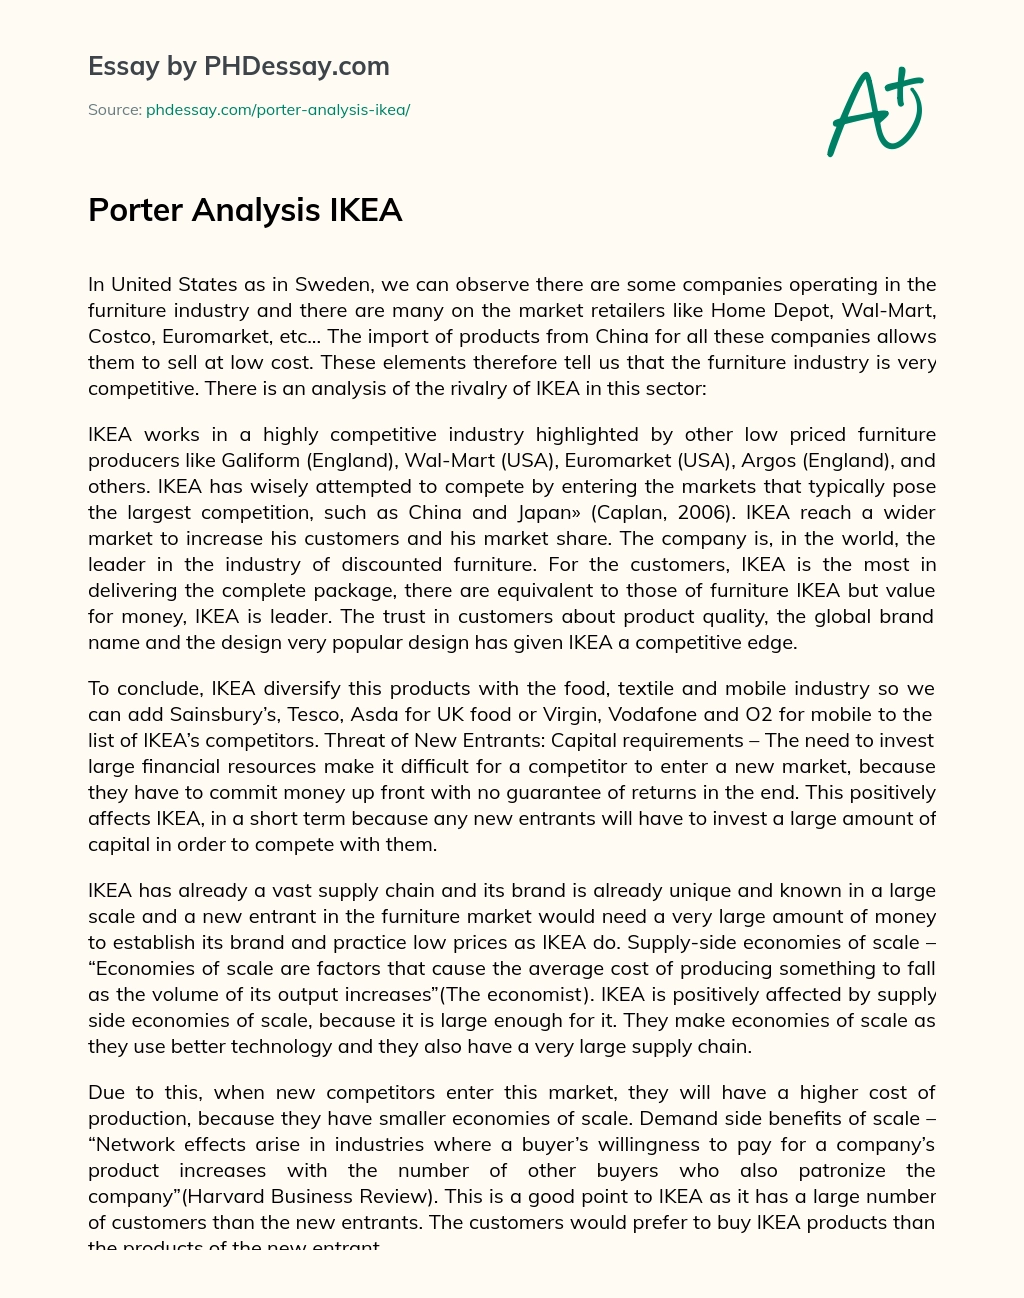 Porter Analysis IKEA essay